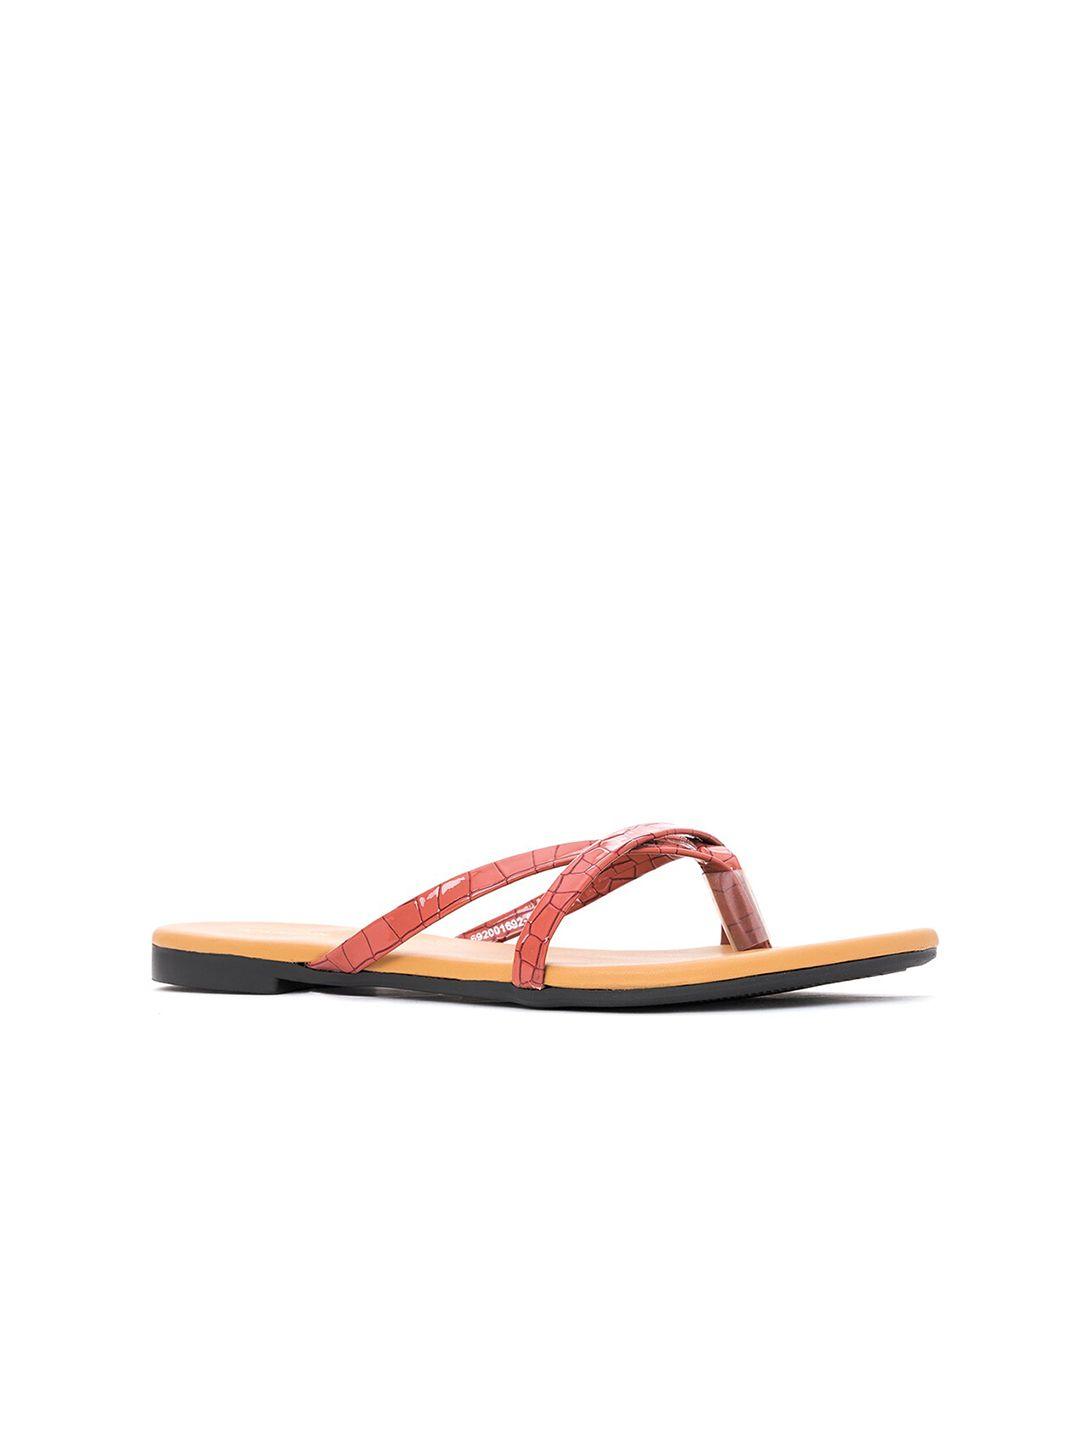 khadims women peach-coloured textured open toe flats